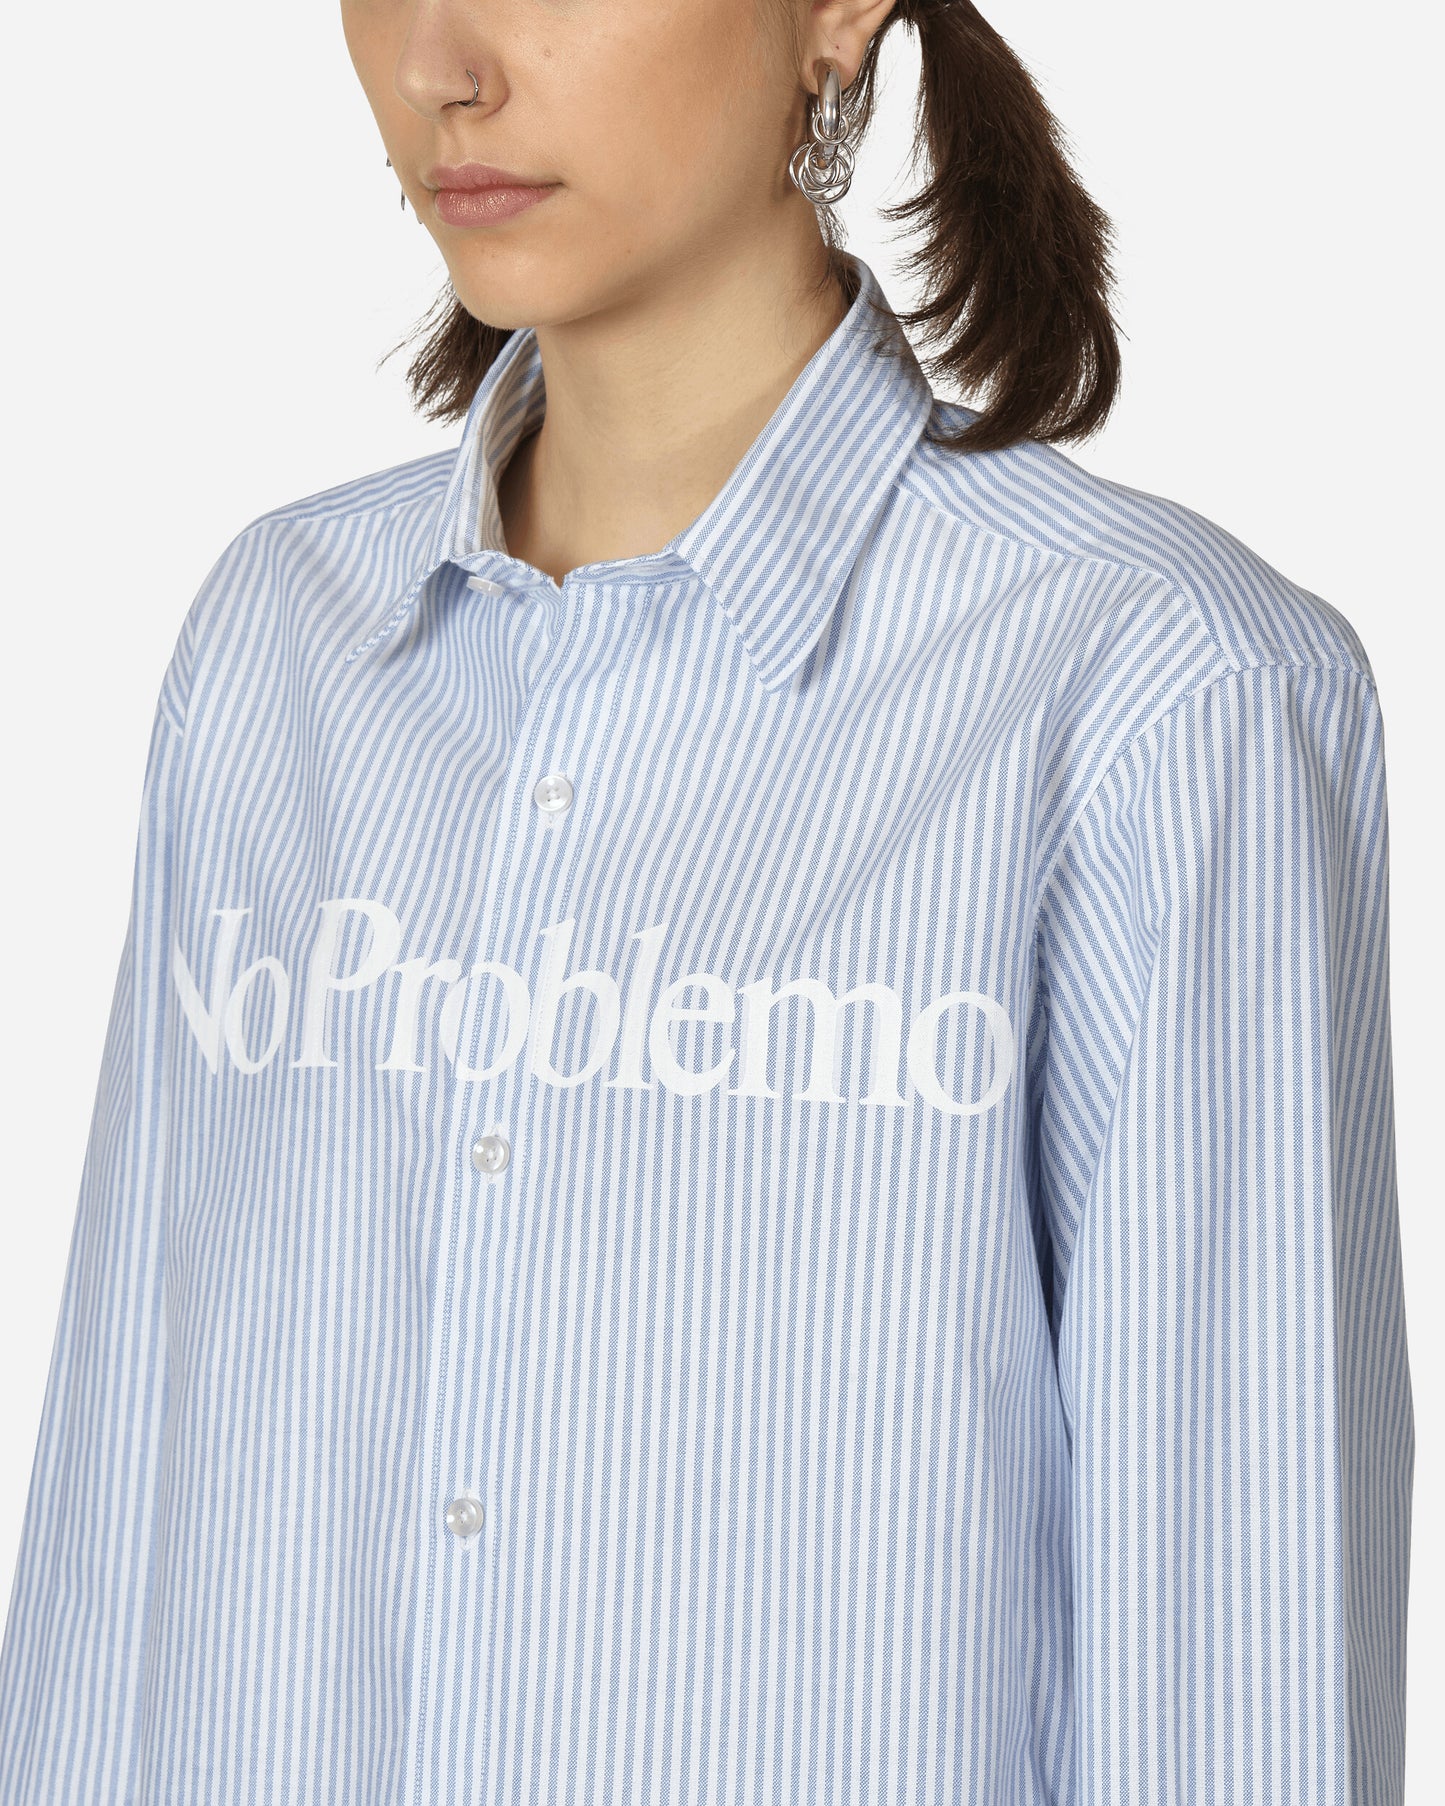 No Problemo No Problemo Oxford Shirt Blue Shirts Longsleeve Shirt NPAR40101 BLUE